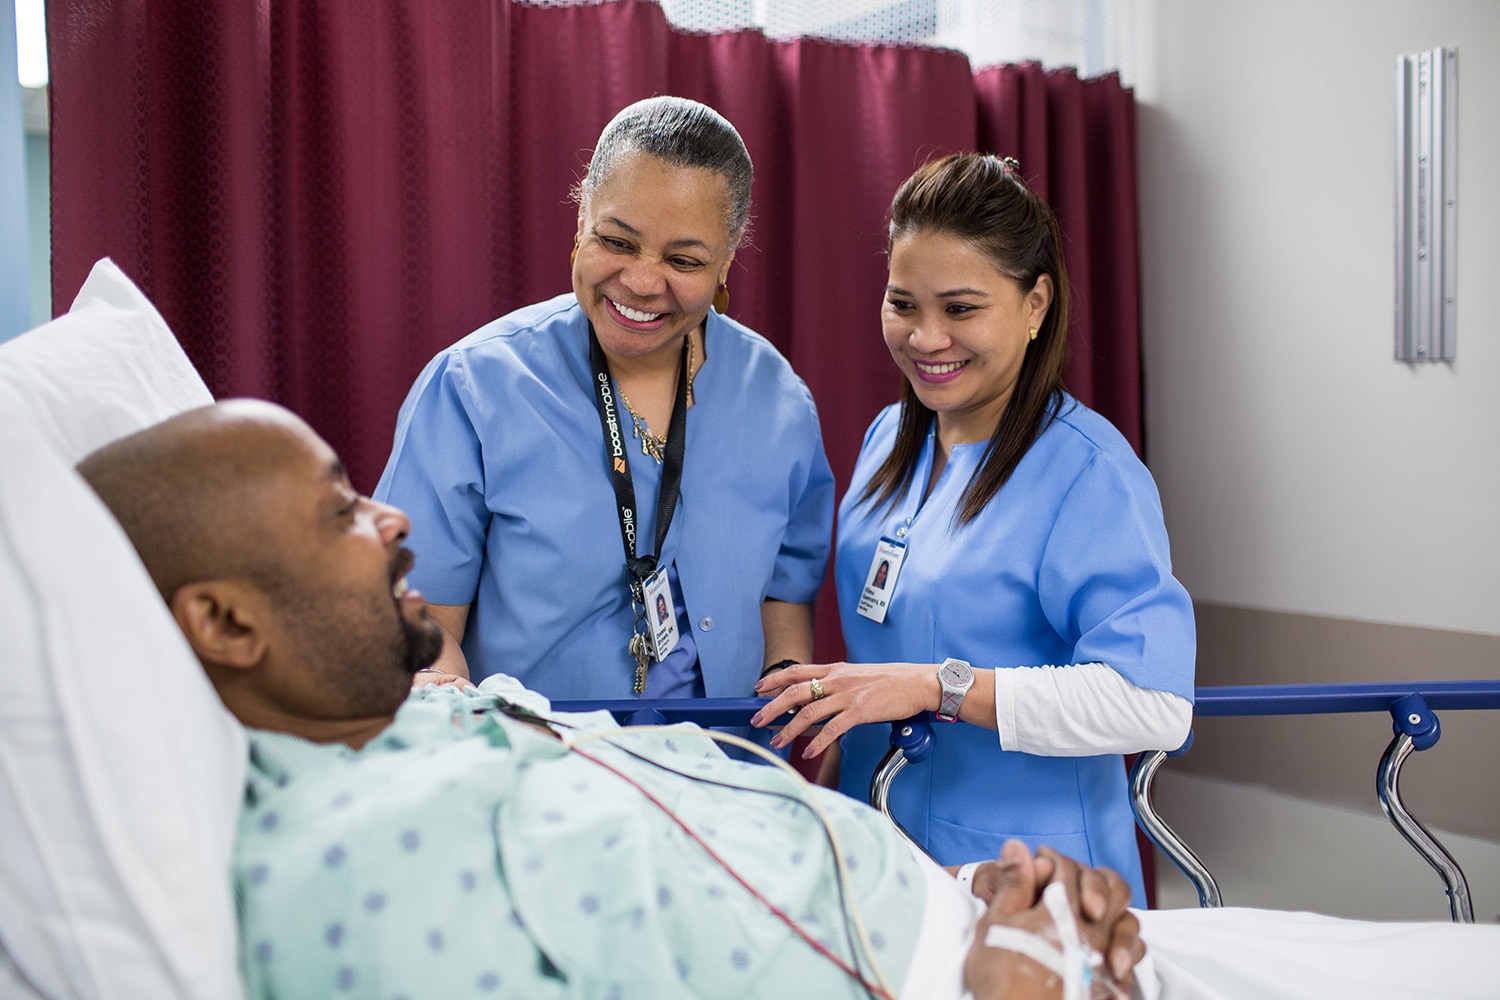 Nursing Jobs - Jobs at Montefiore Medical Center